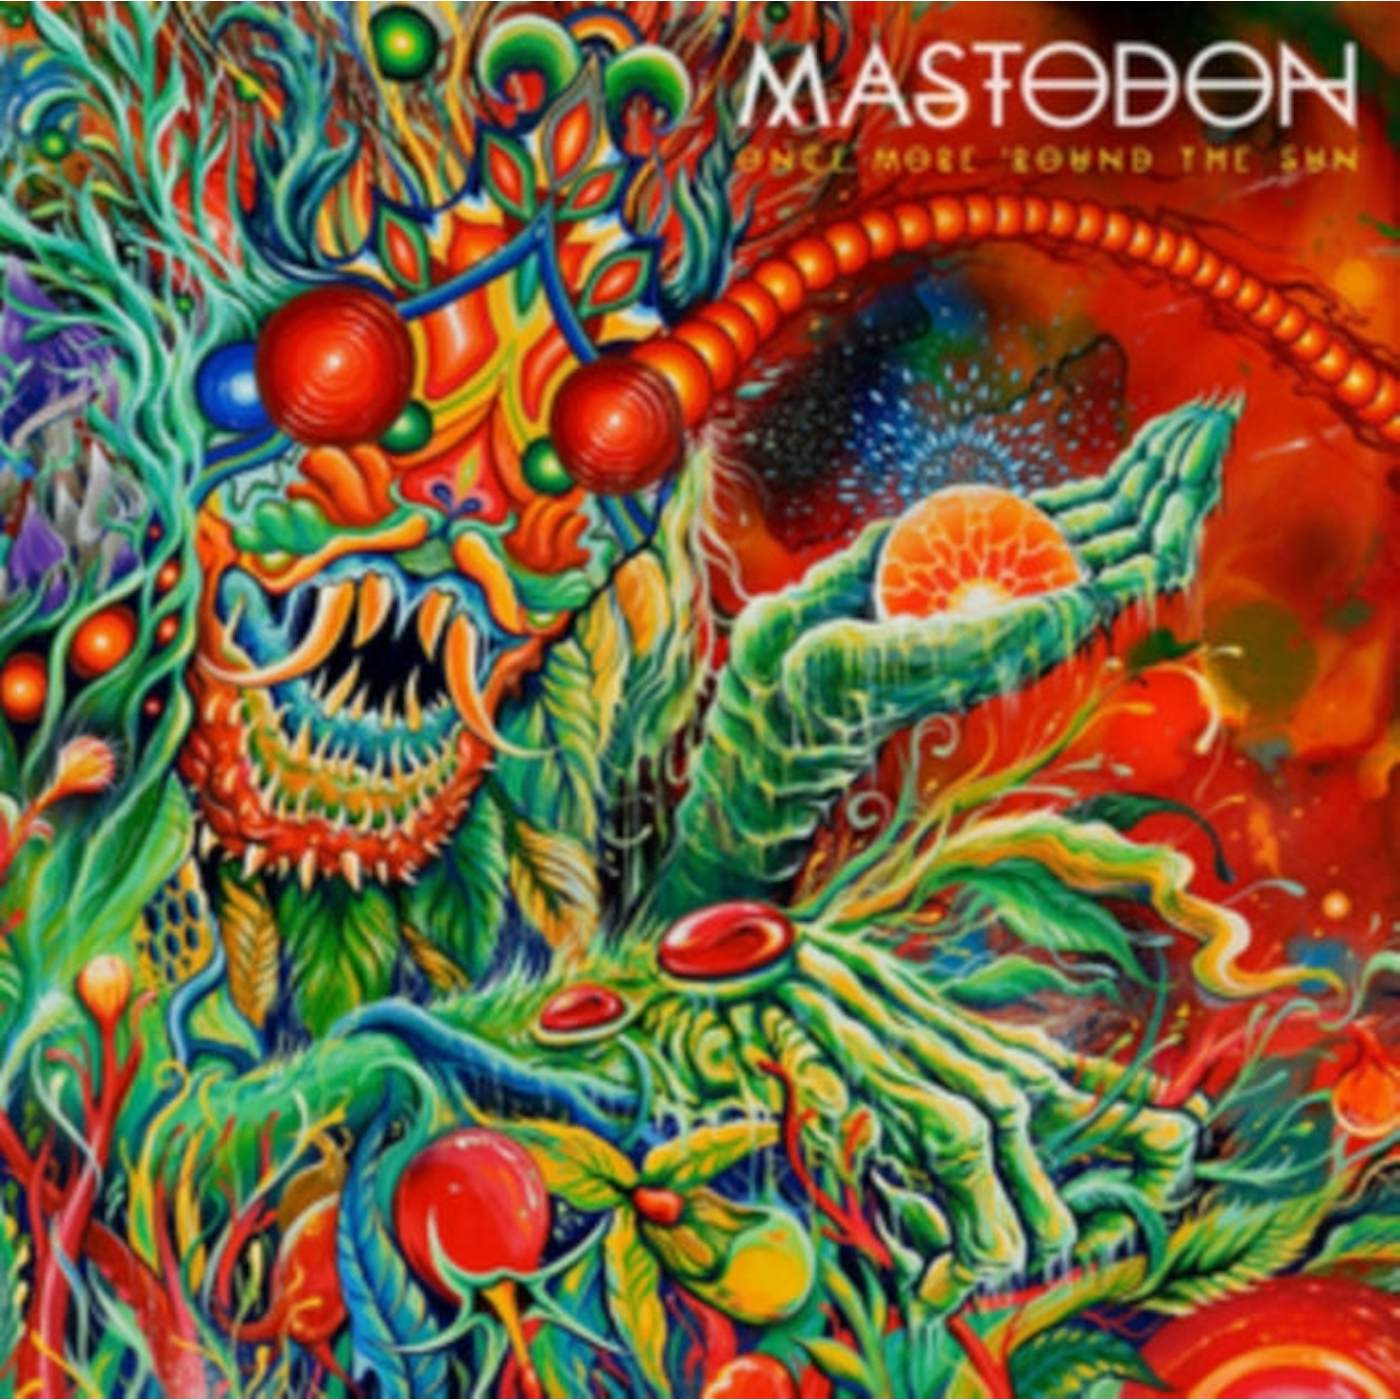 Mastodon LP Vinyl Record - Once More Round The Sun